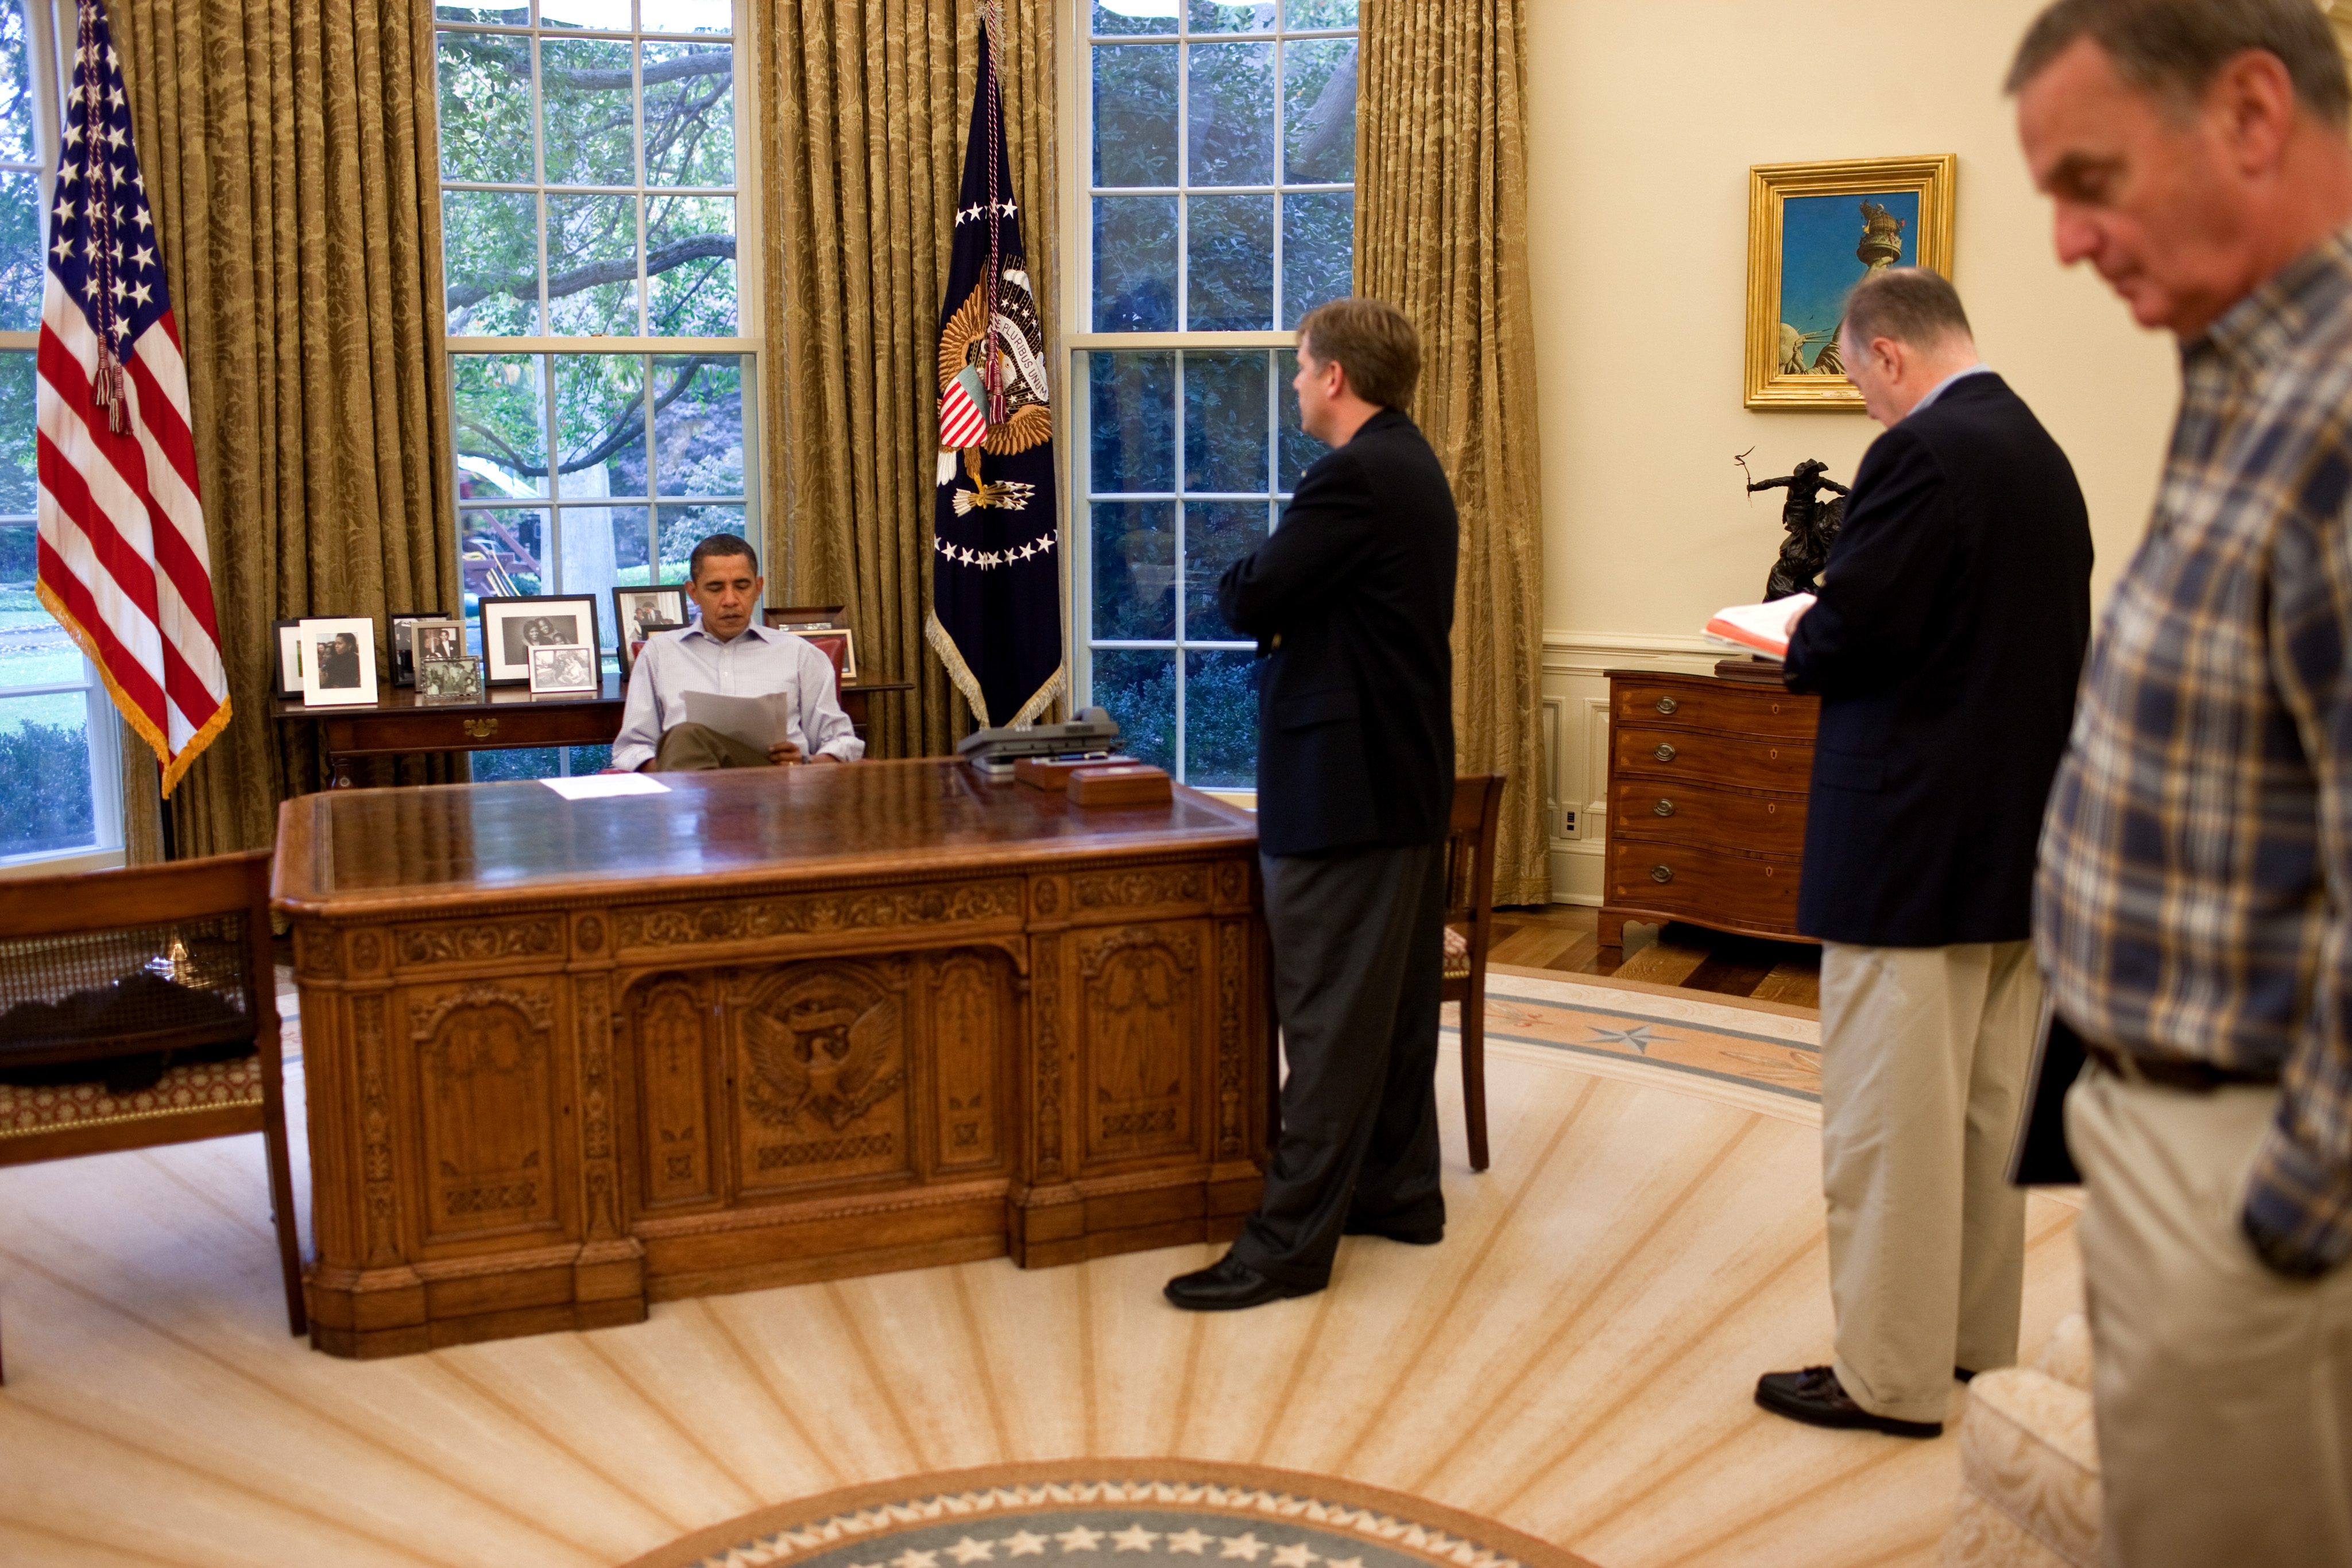 Barack Obama meets with Mike McFaul, Tom Donilon, and Gen. Jim Jones, 2009